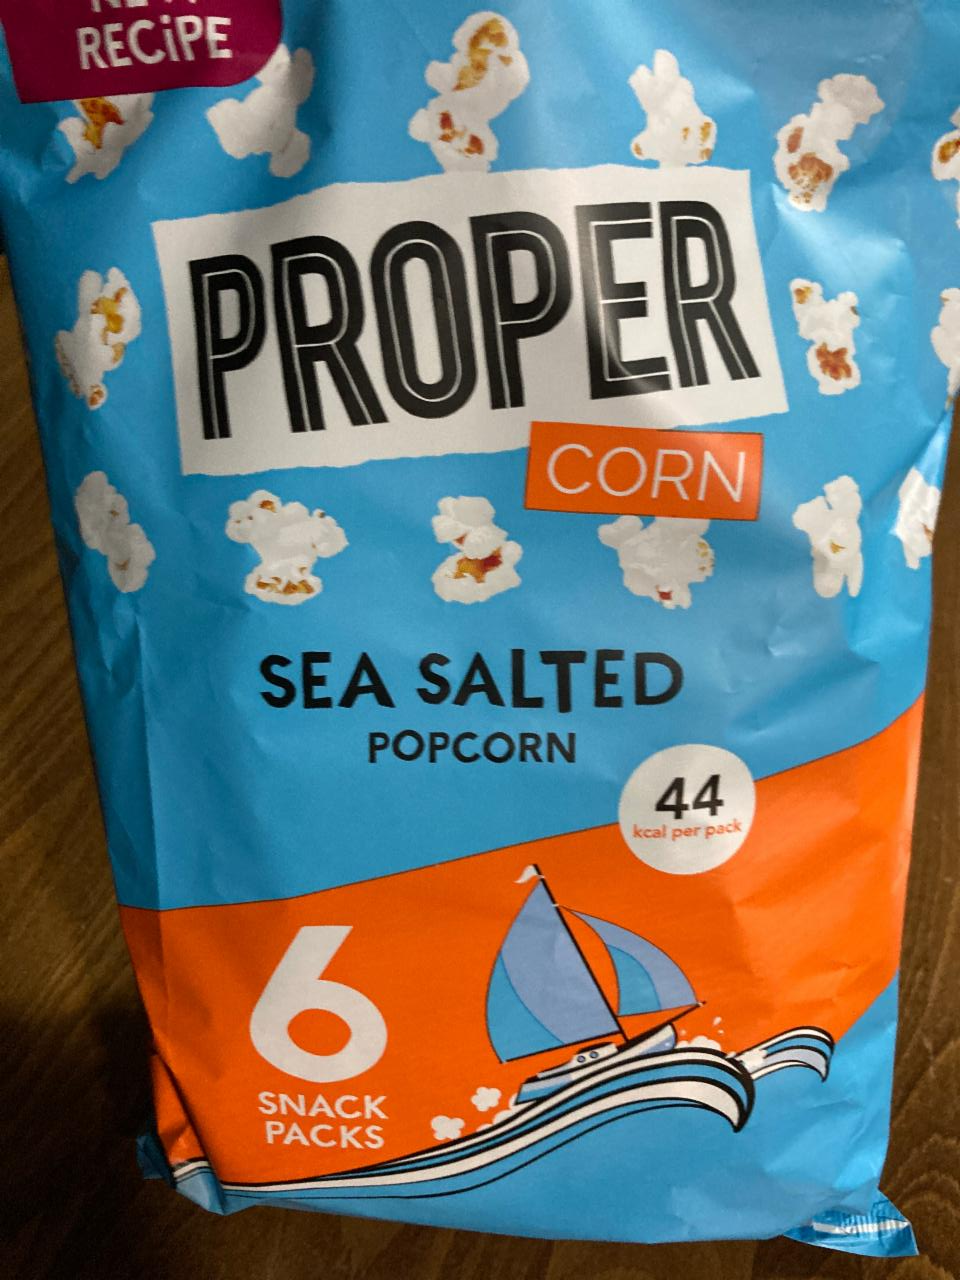 Fotografie - proper corn sea salted popcorn